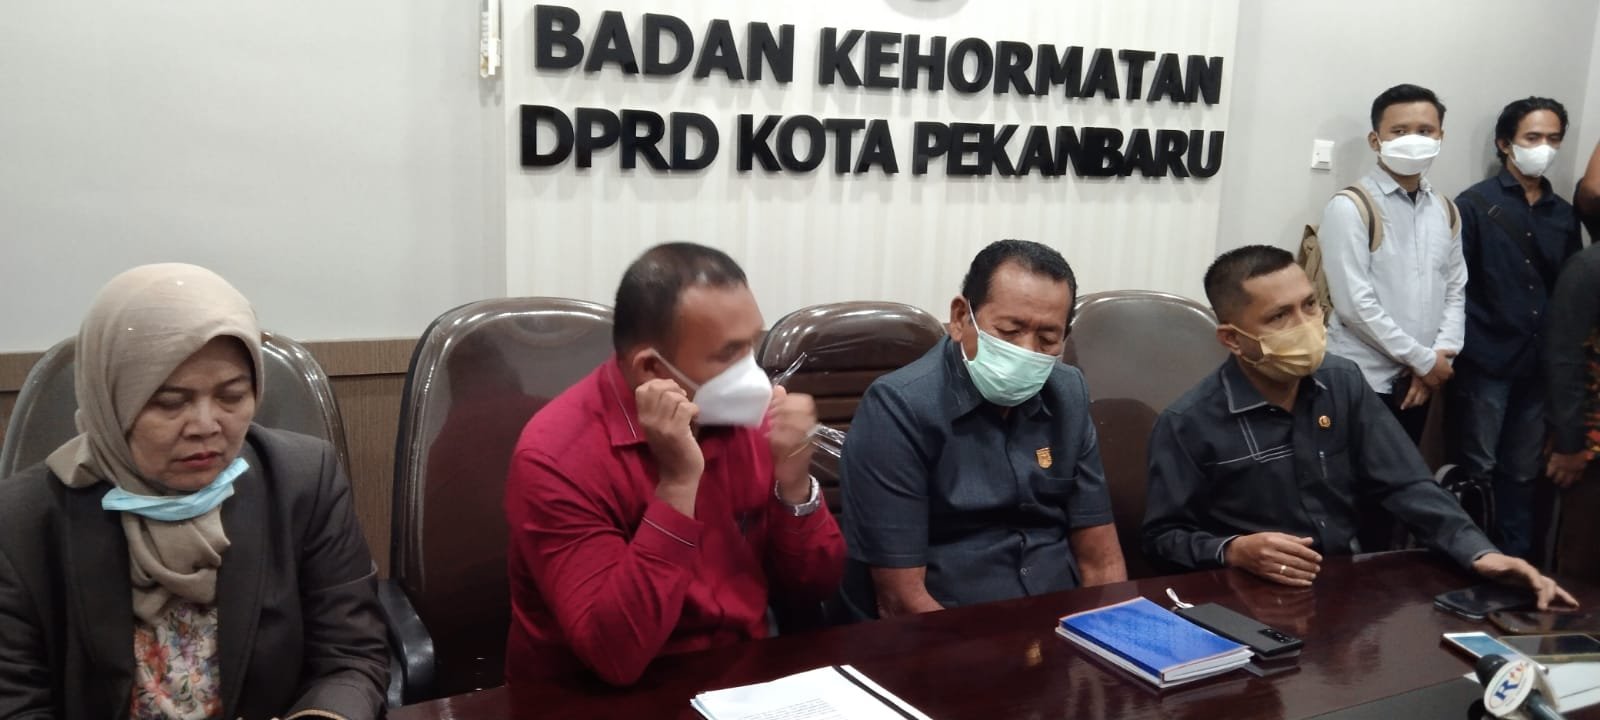 Ketua DPRD Pekanbaru Hamdani Diberhentikan, Badan Kehormatan Deadline 10 Hari Pimpinan DPRD untuk Tindak Lanjuti